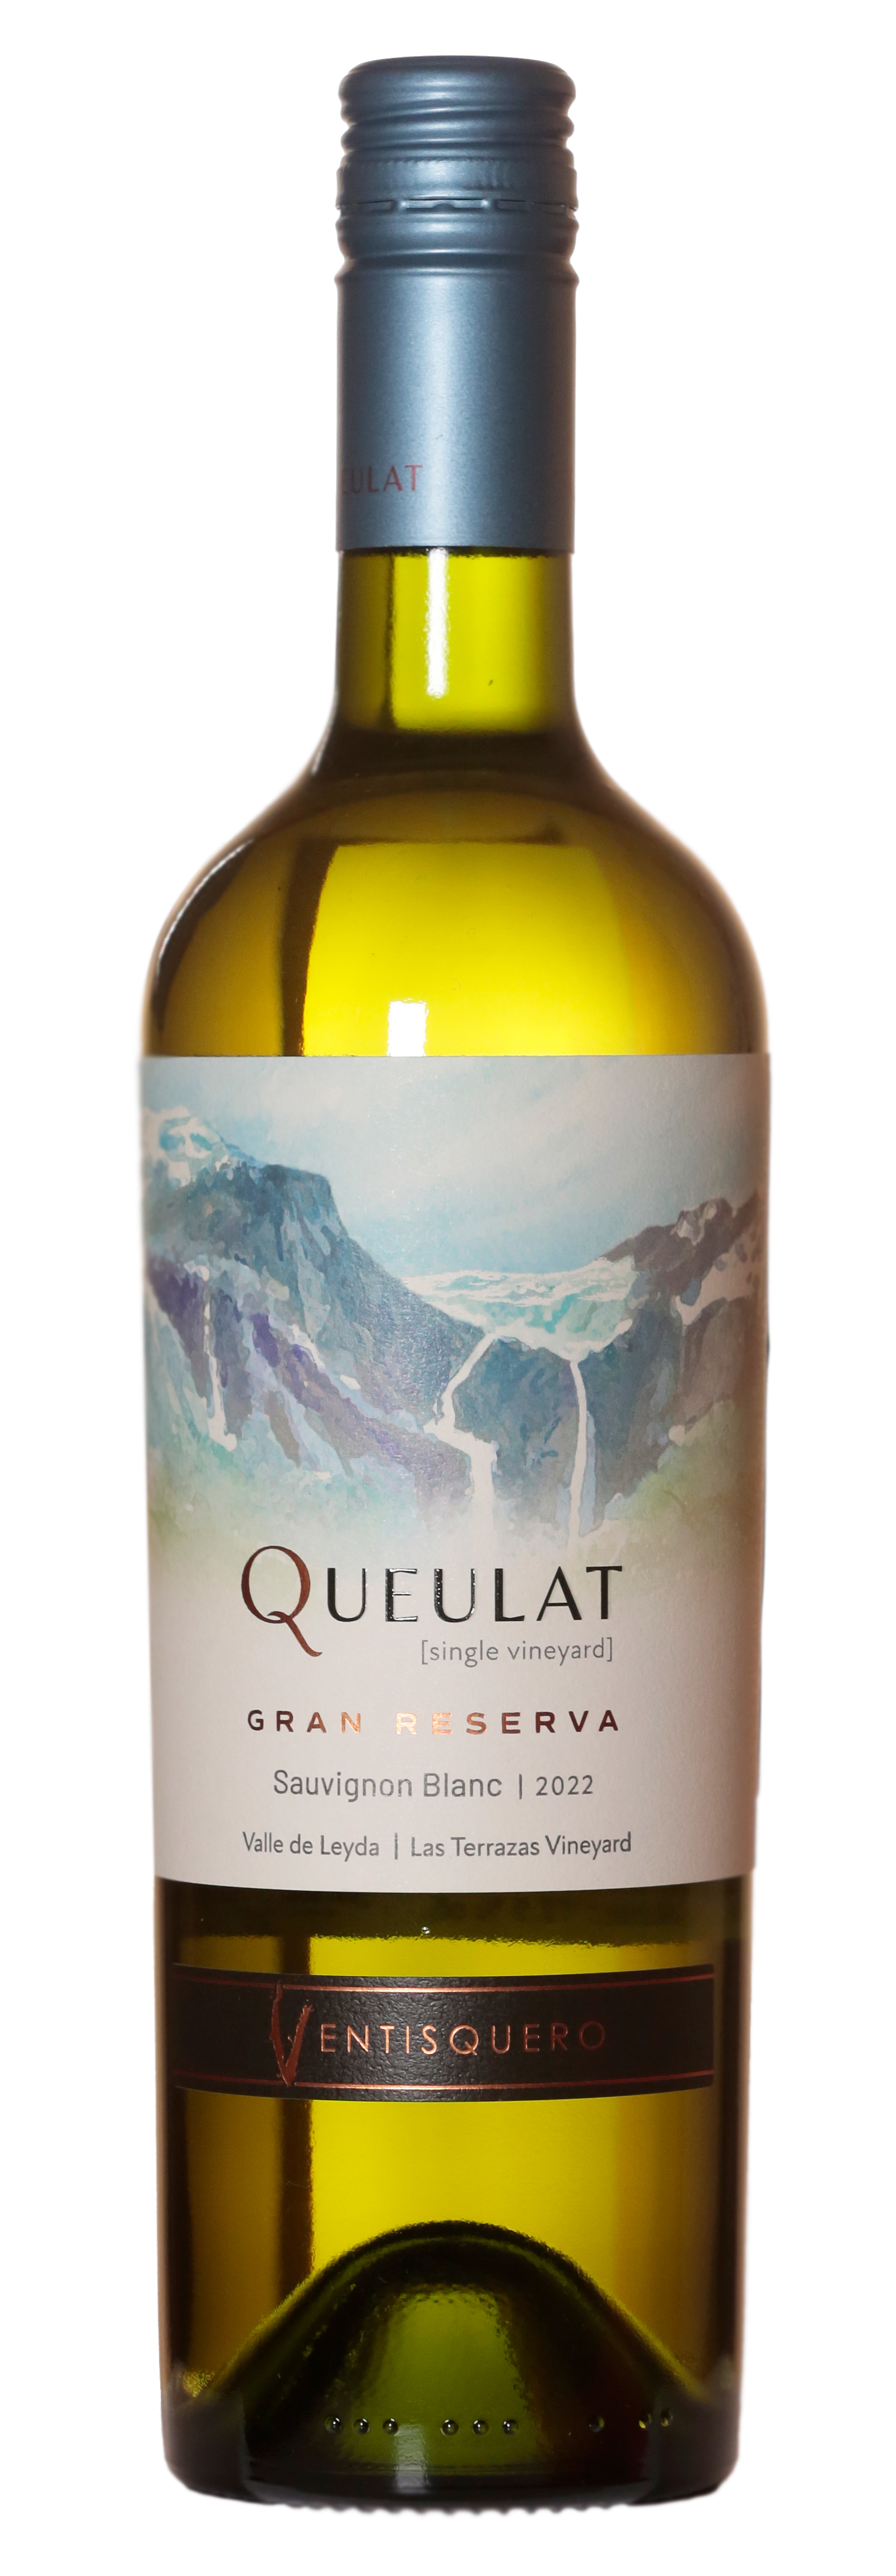 Wine Ventisquero Queulat Gran Reserva Sauvignon Blanc